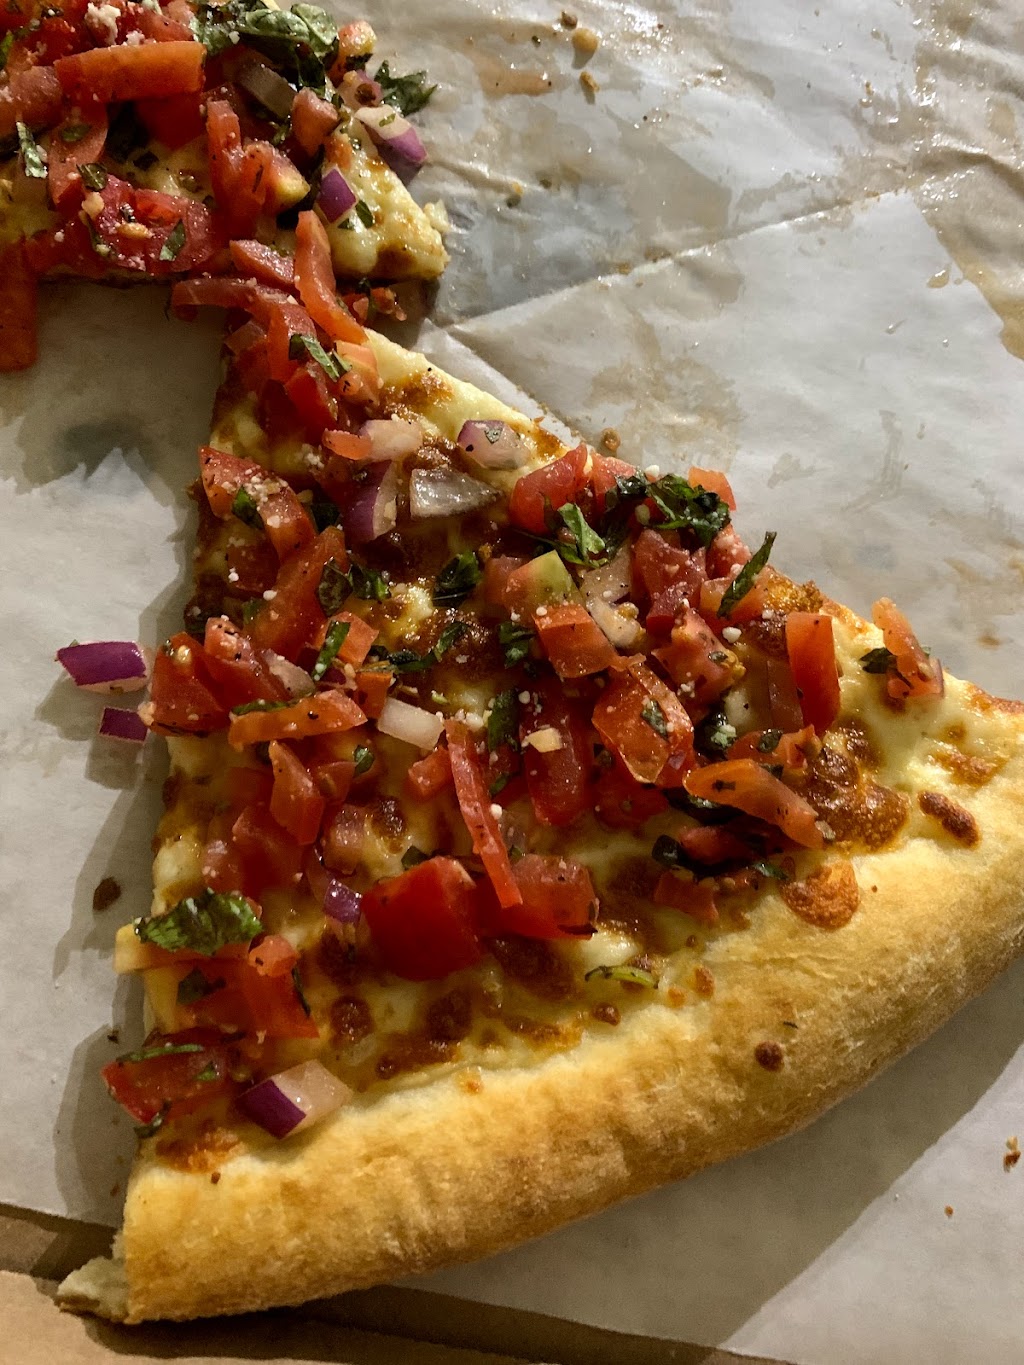 Luigis Pizza Fresca Burlington | 1700 Columbus Rd #103, Burlington, NJ 08016 | Phone: (609) 239-8888